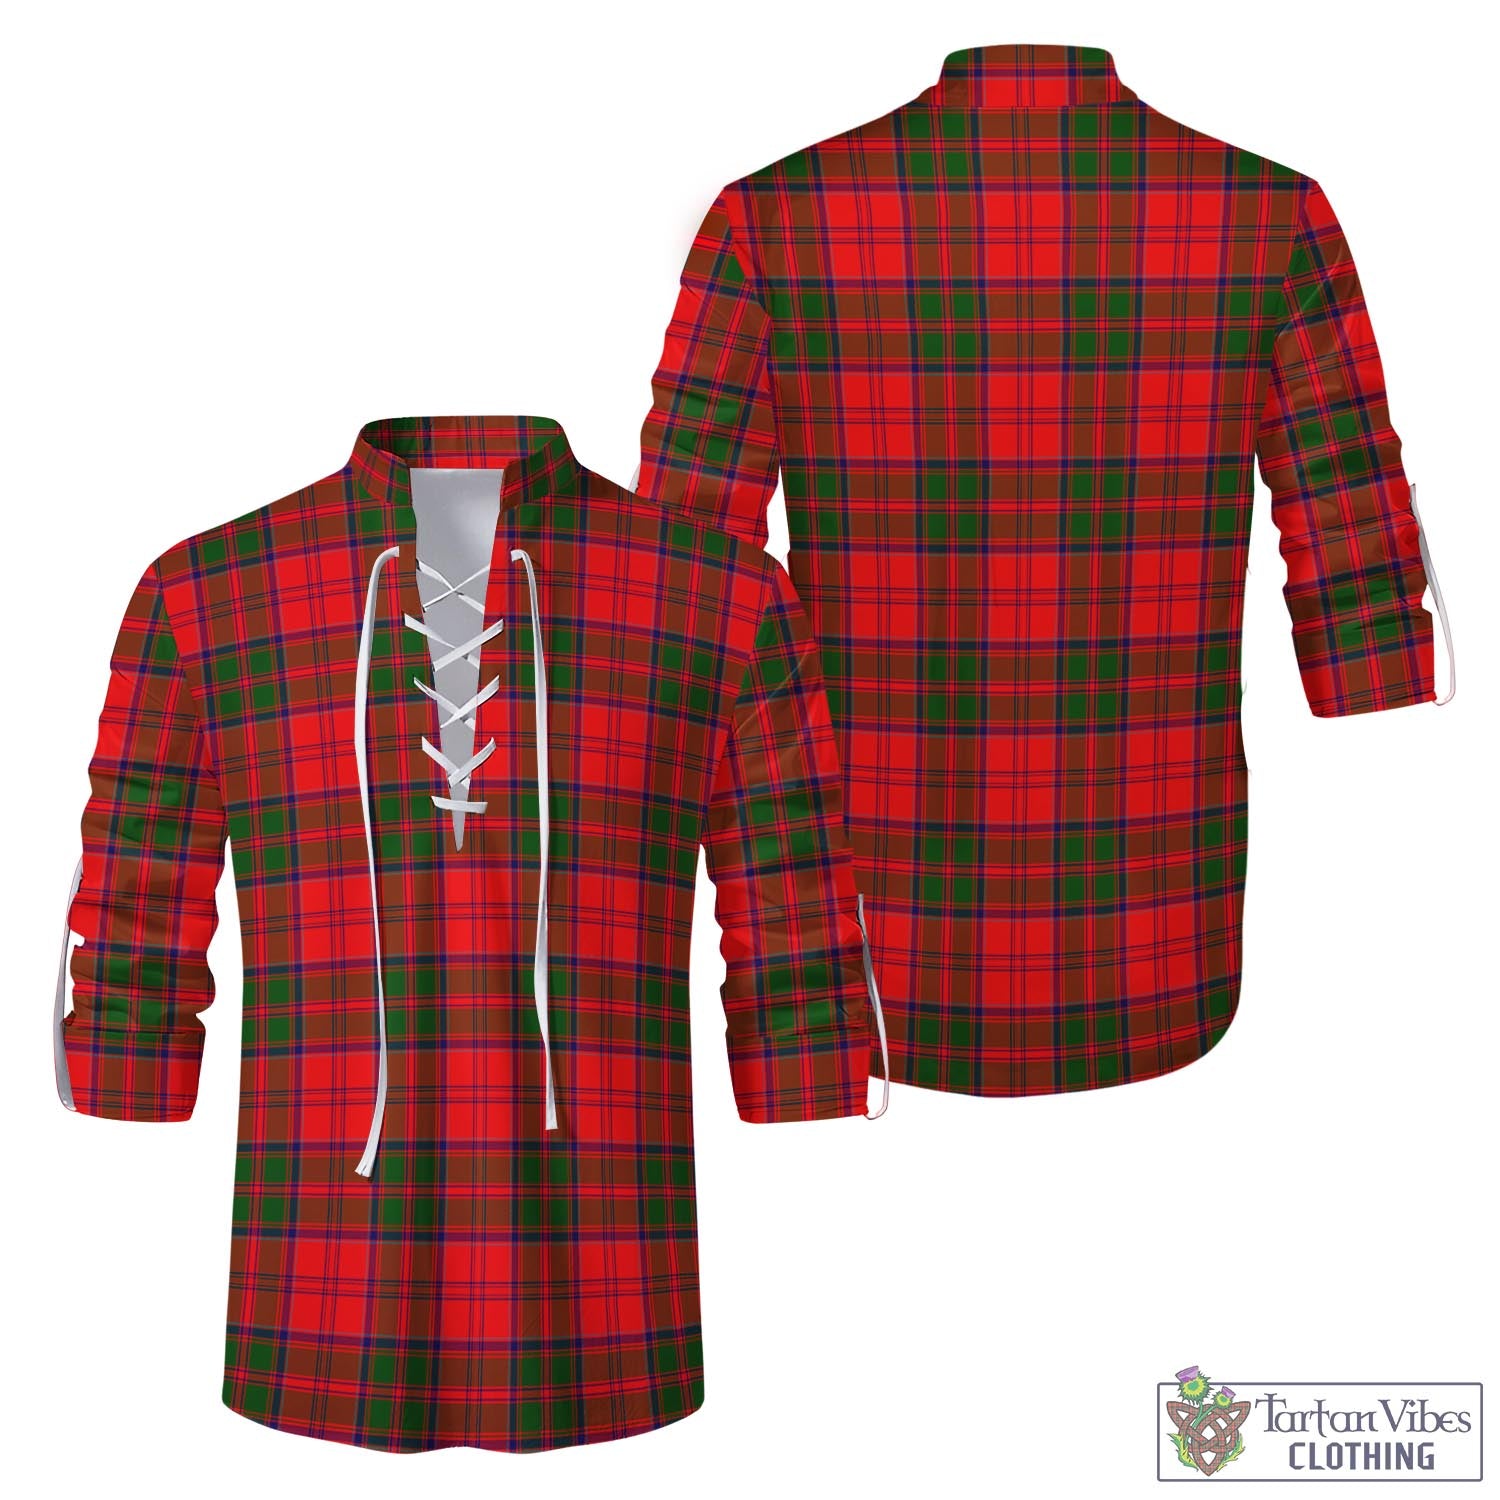 Tartan Vibes Clothing Heron Tartan Men's Scottish Traditional Jacobite Ghillie Kilt Shirt